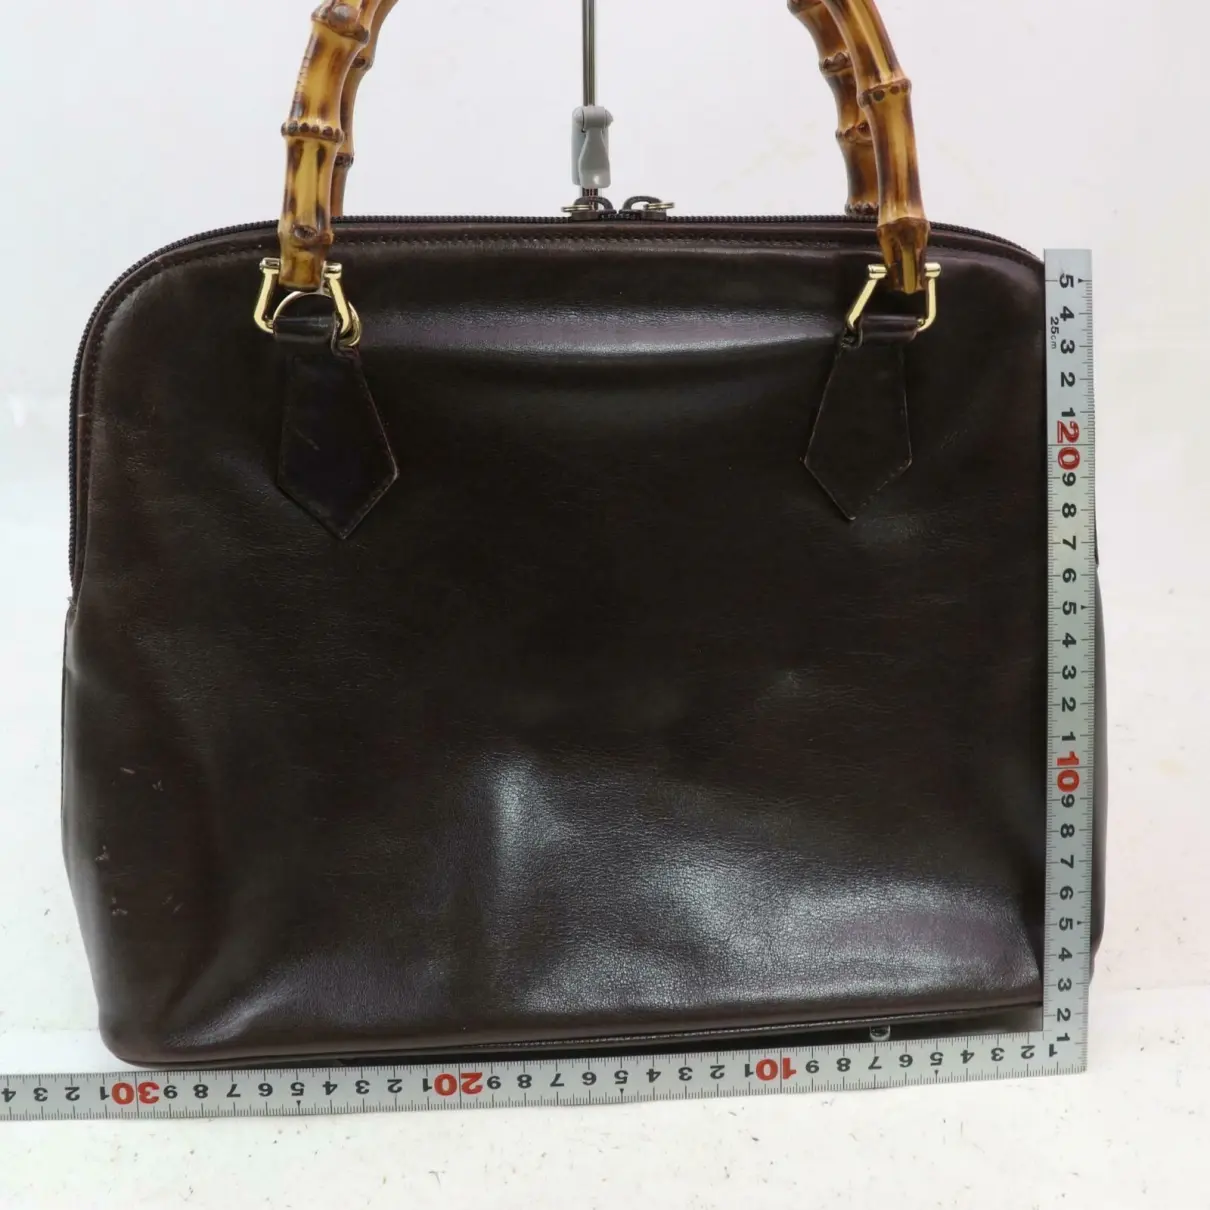 Gucci Bamboo leather handbag for sale - Vintage